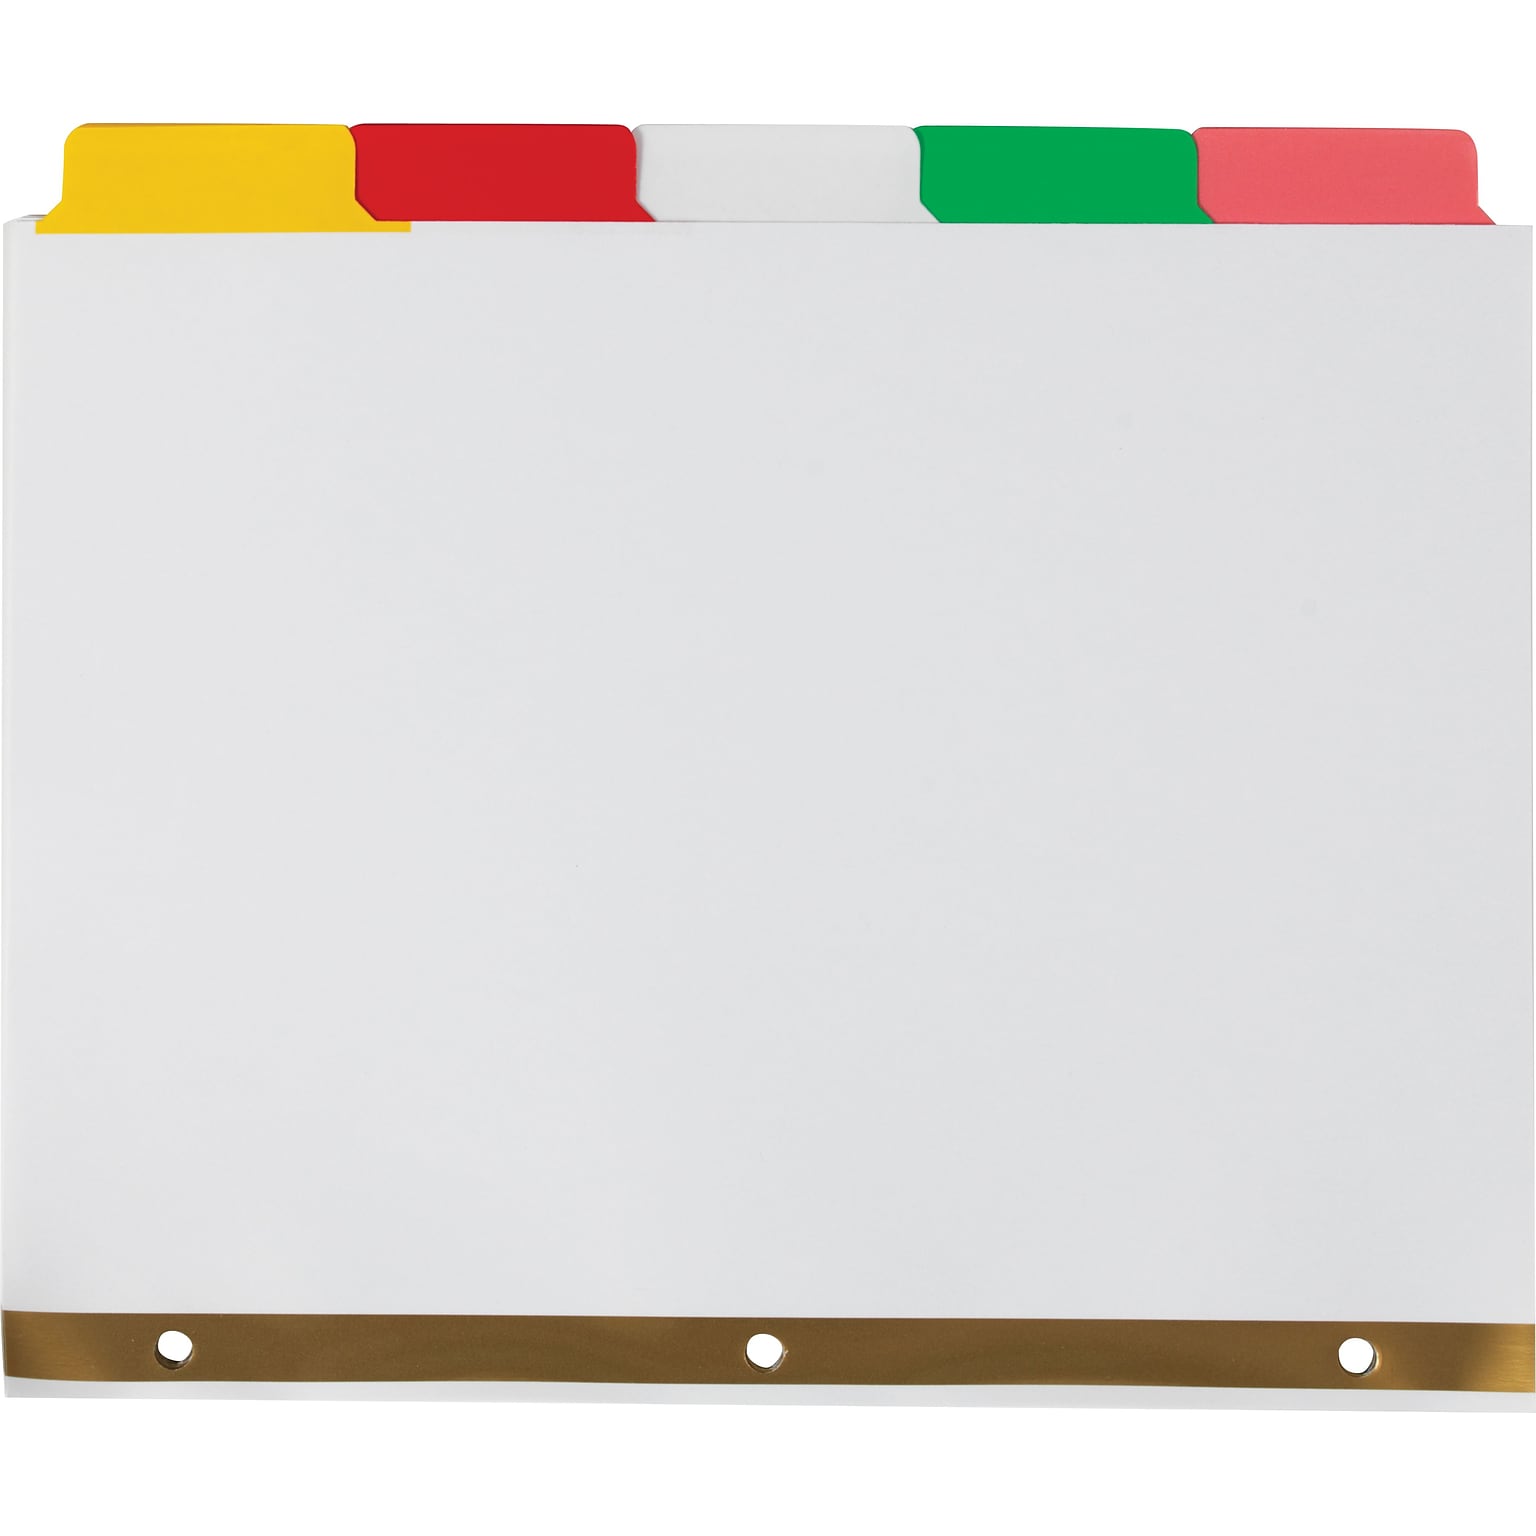 Staples Write-On™ BIG TAB Dividers, 5-Tab Set, Color Tabs, 4/Pack (13509)